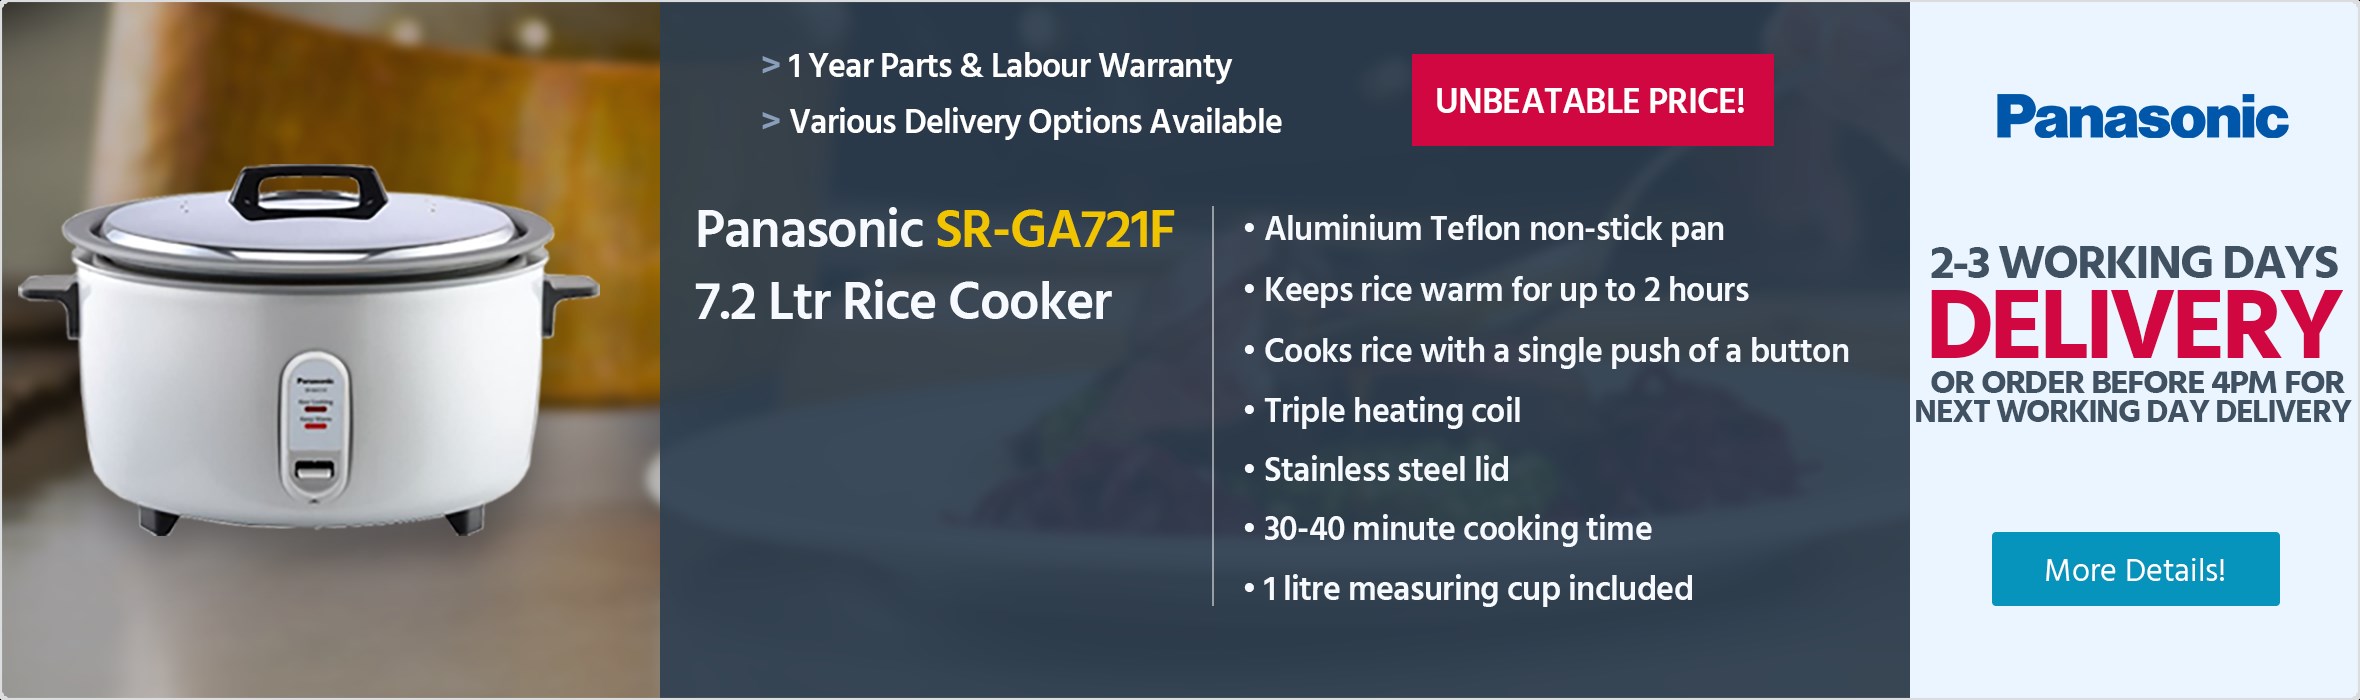 Panasonic SR-GA721F 7.2 Ltr Rice Cooker